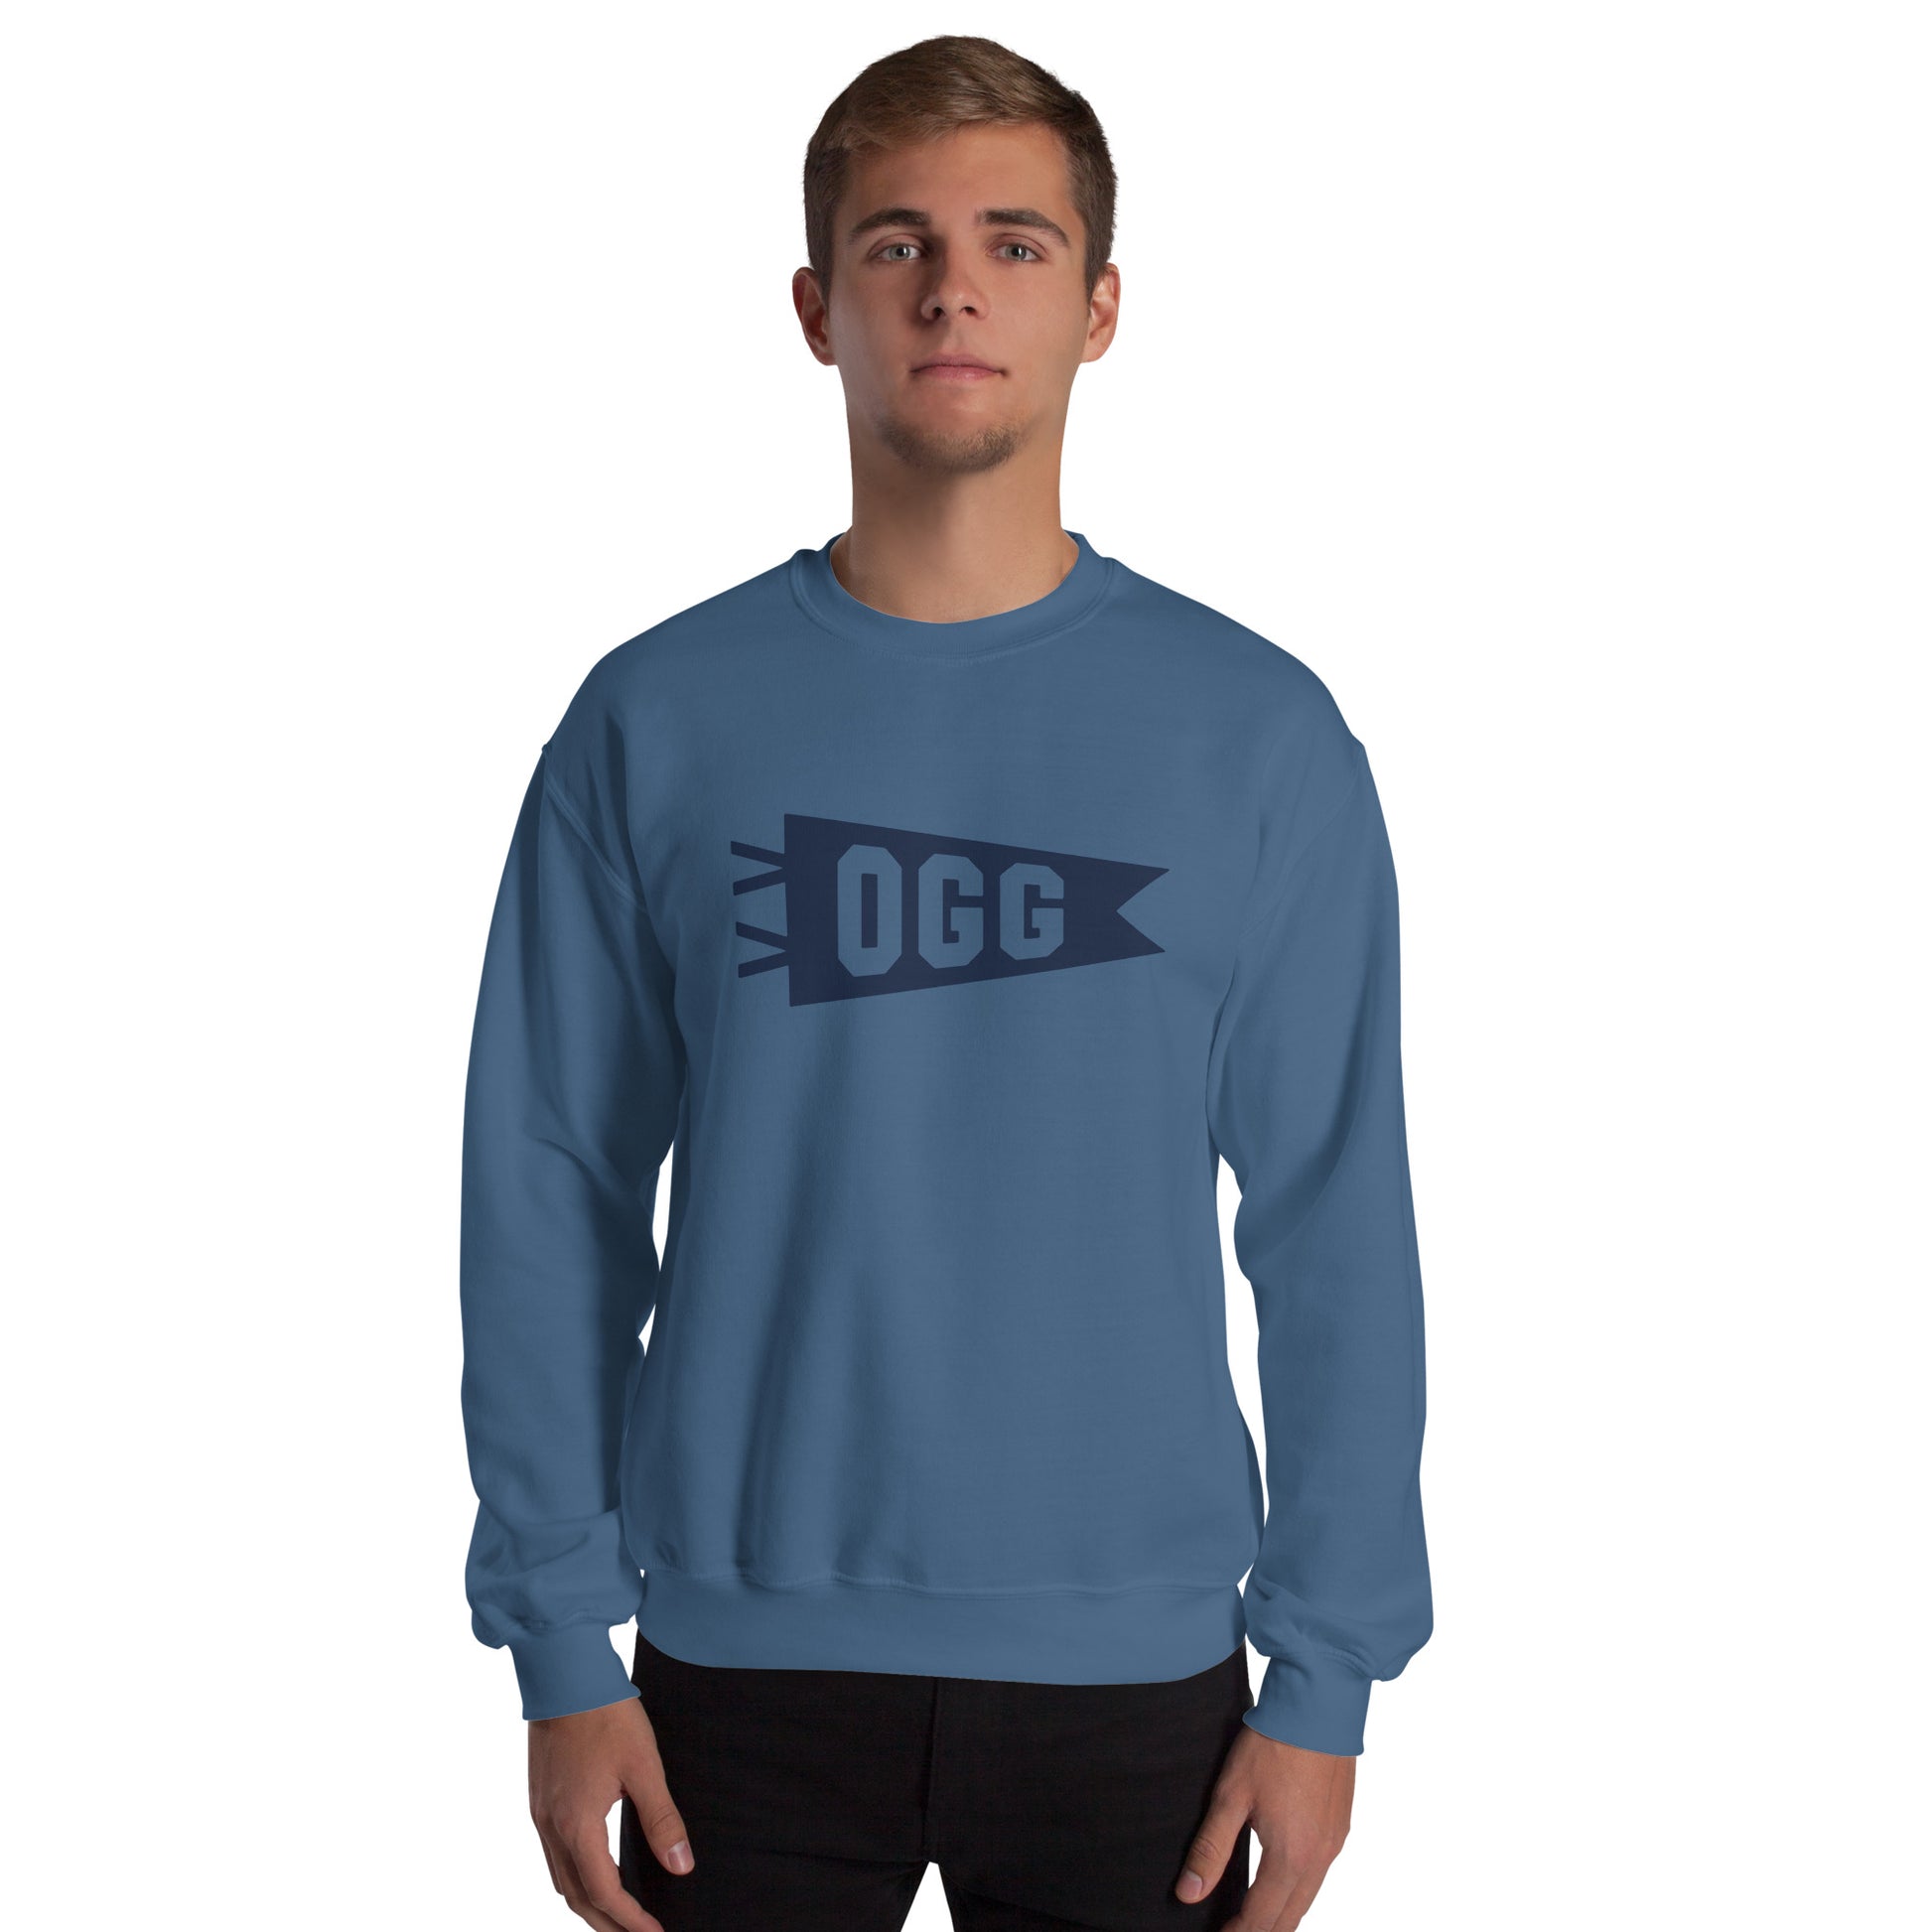 Airport Code Sweatshirt - Navy Blue Graphic • OGG Maui • YHM Designs - Image 06